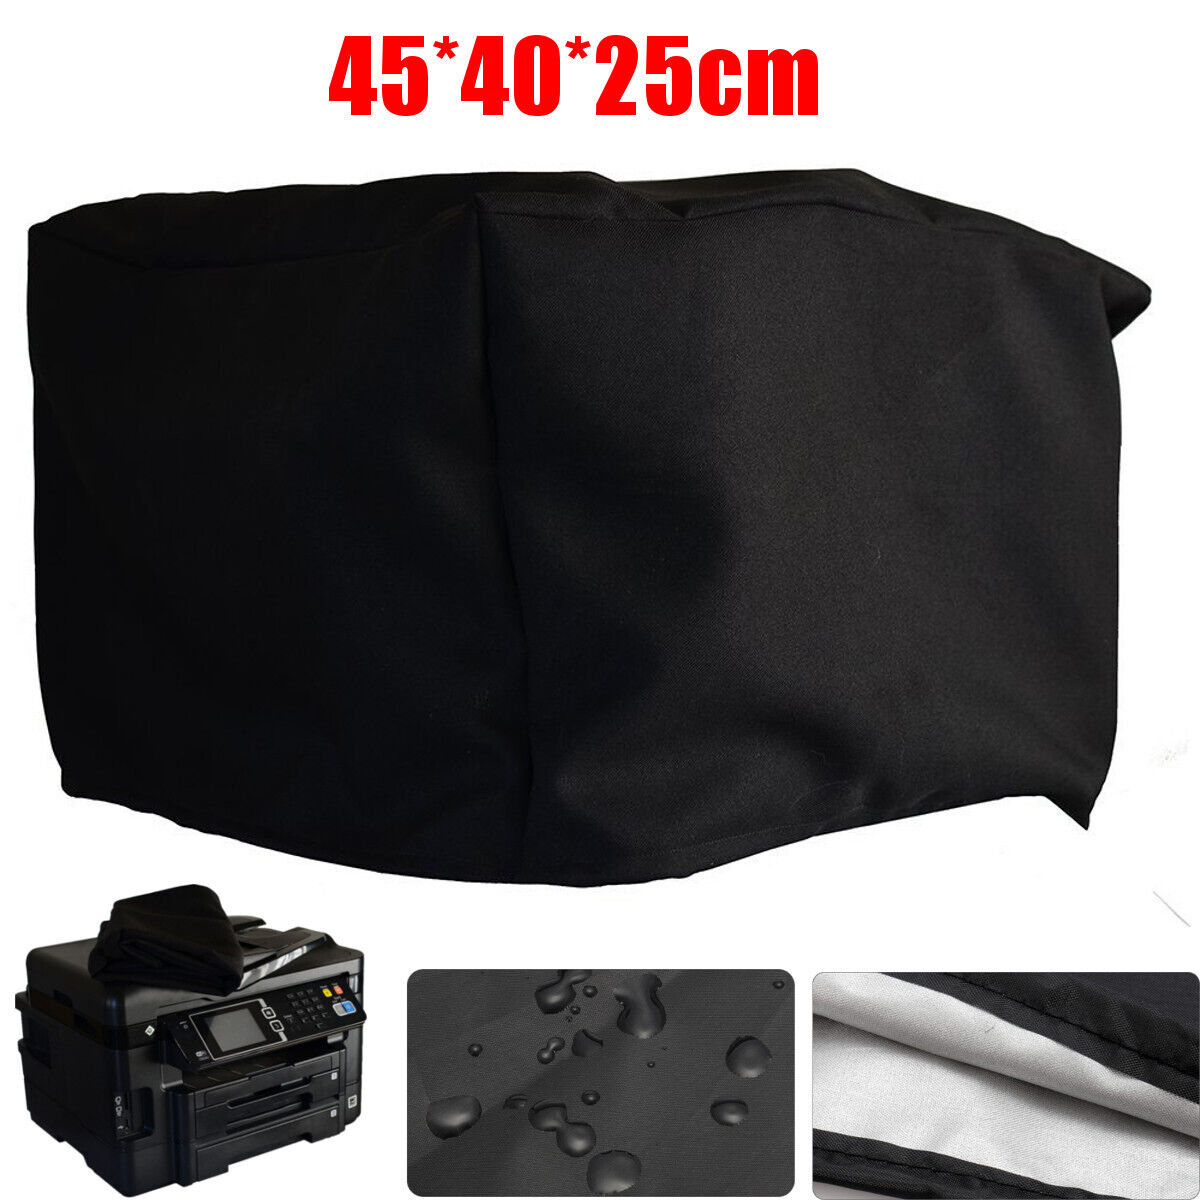 Printer Dust Cover Waterproof Black Nylon 18X16x10'' For Epson Workforce WF-3620